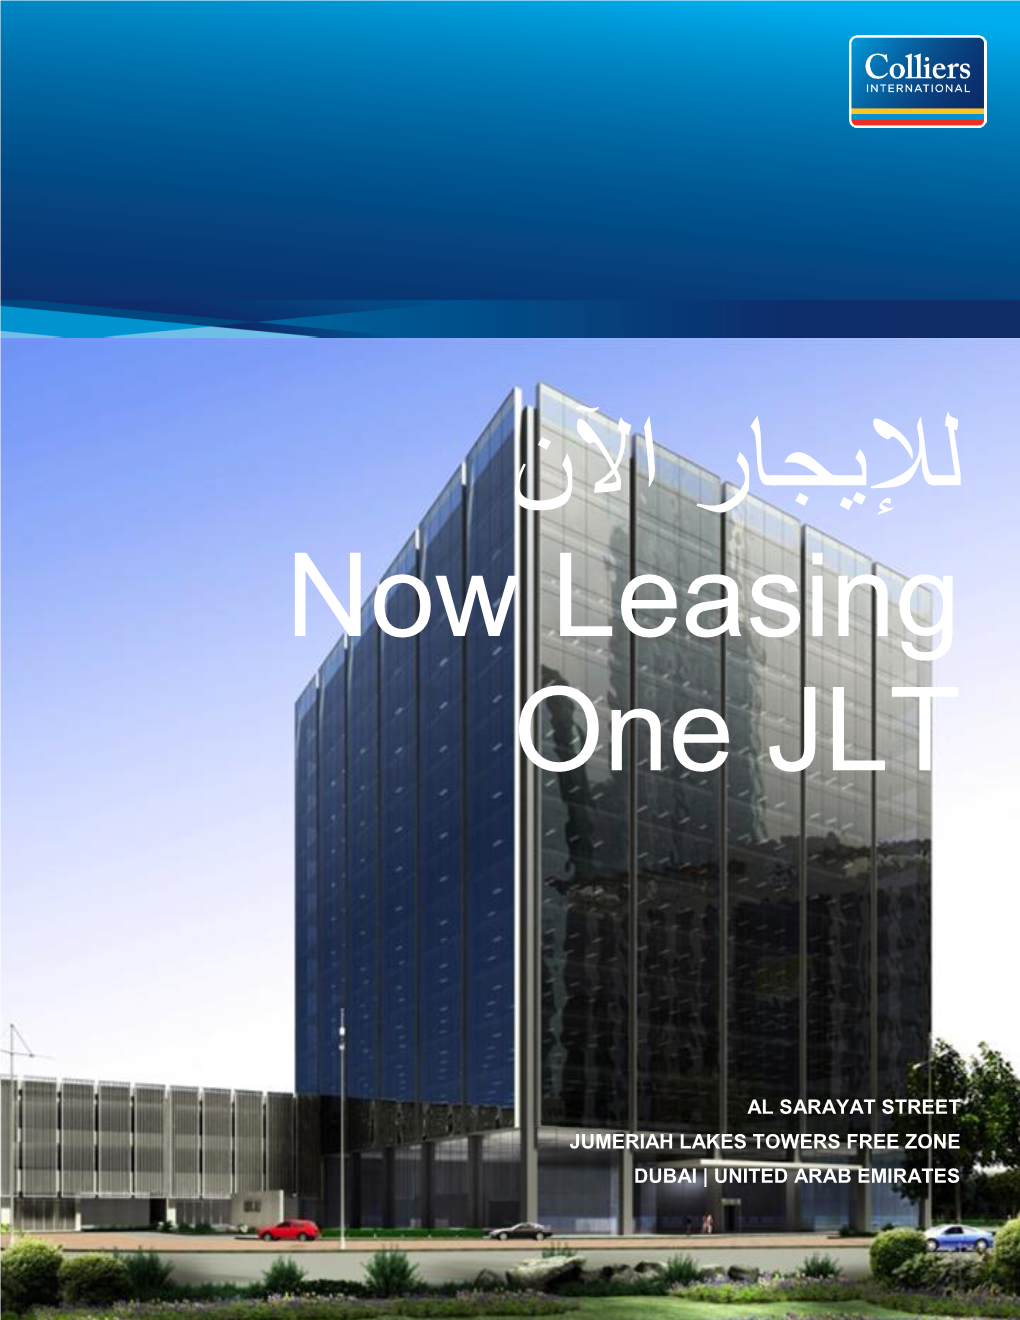 Al Sarayat Street Jumeriah Lakes Towers Free Zone Dubai | United Arab Emirates